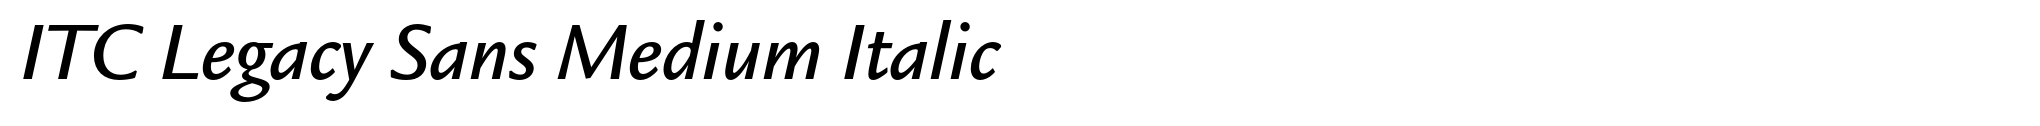 ITC Legacy Sans Medium Italic image